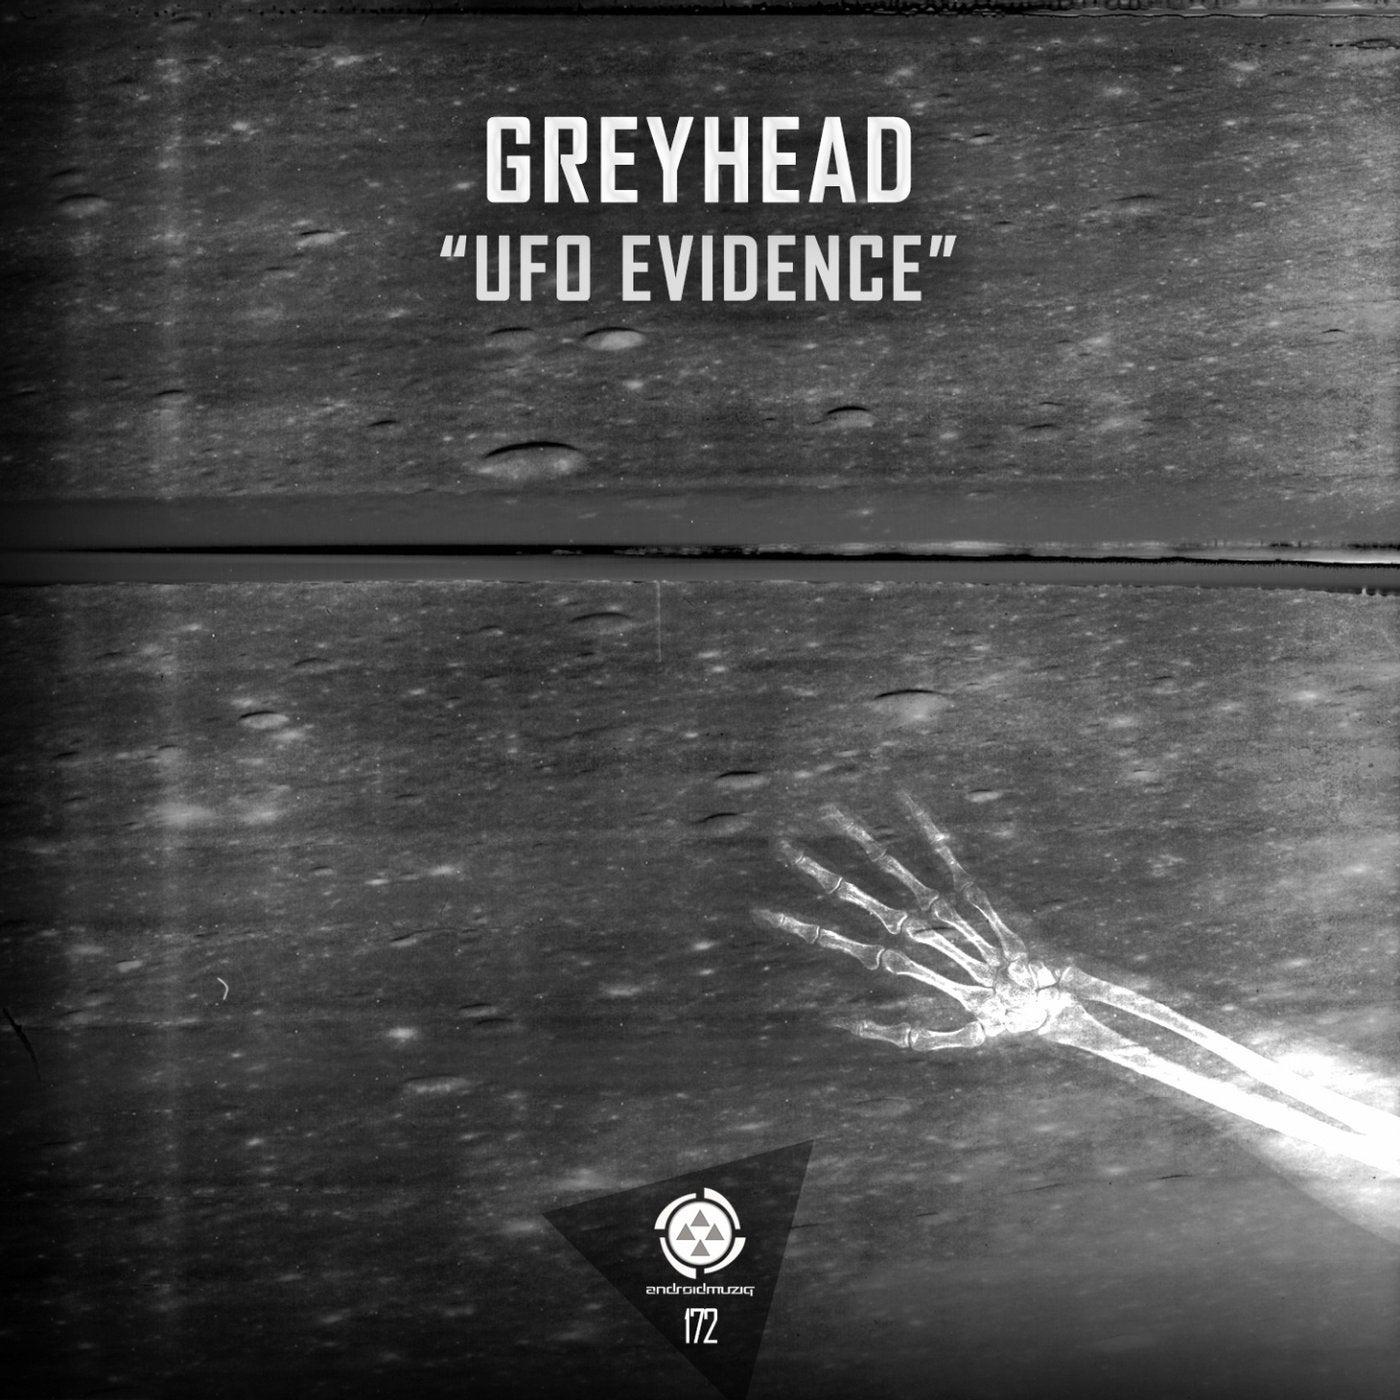 UFO Evidence